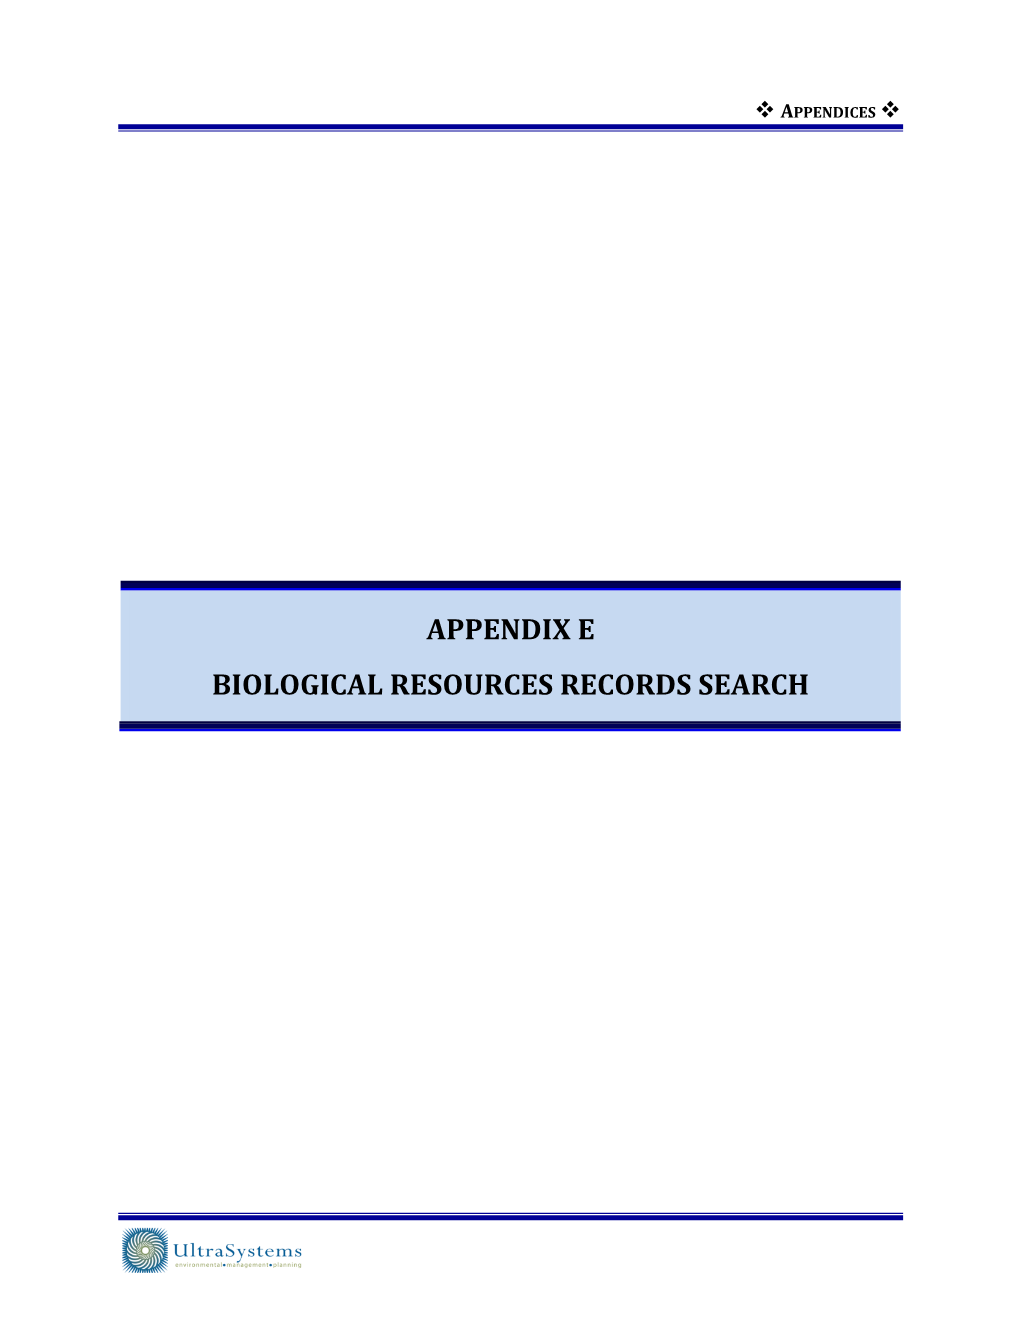 Appendix E Biological Resources Records Search